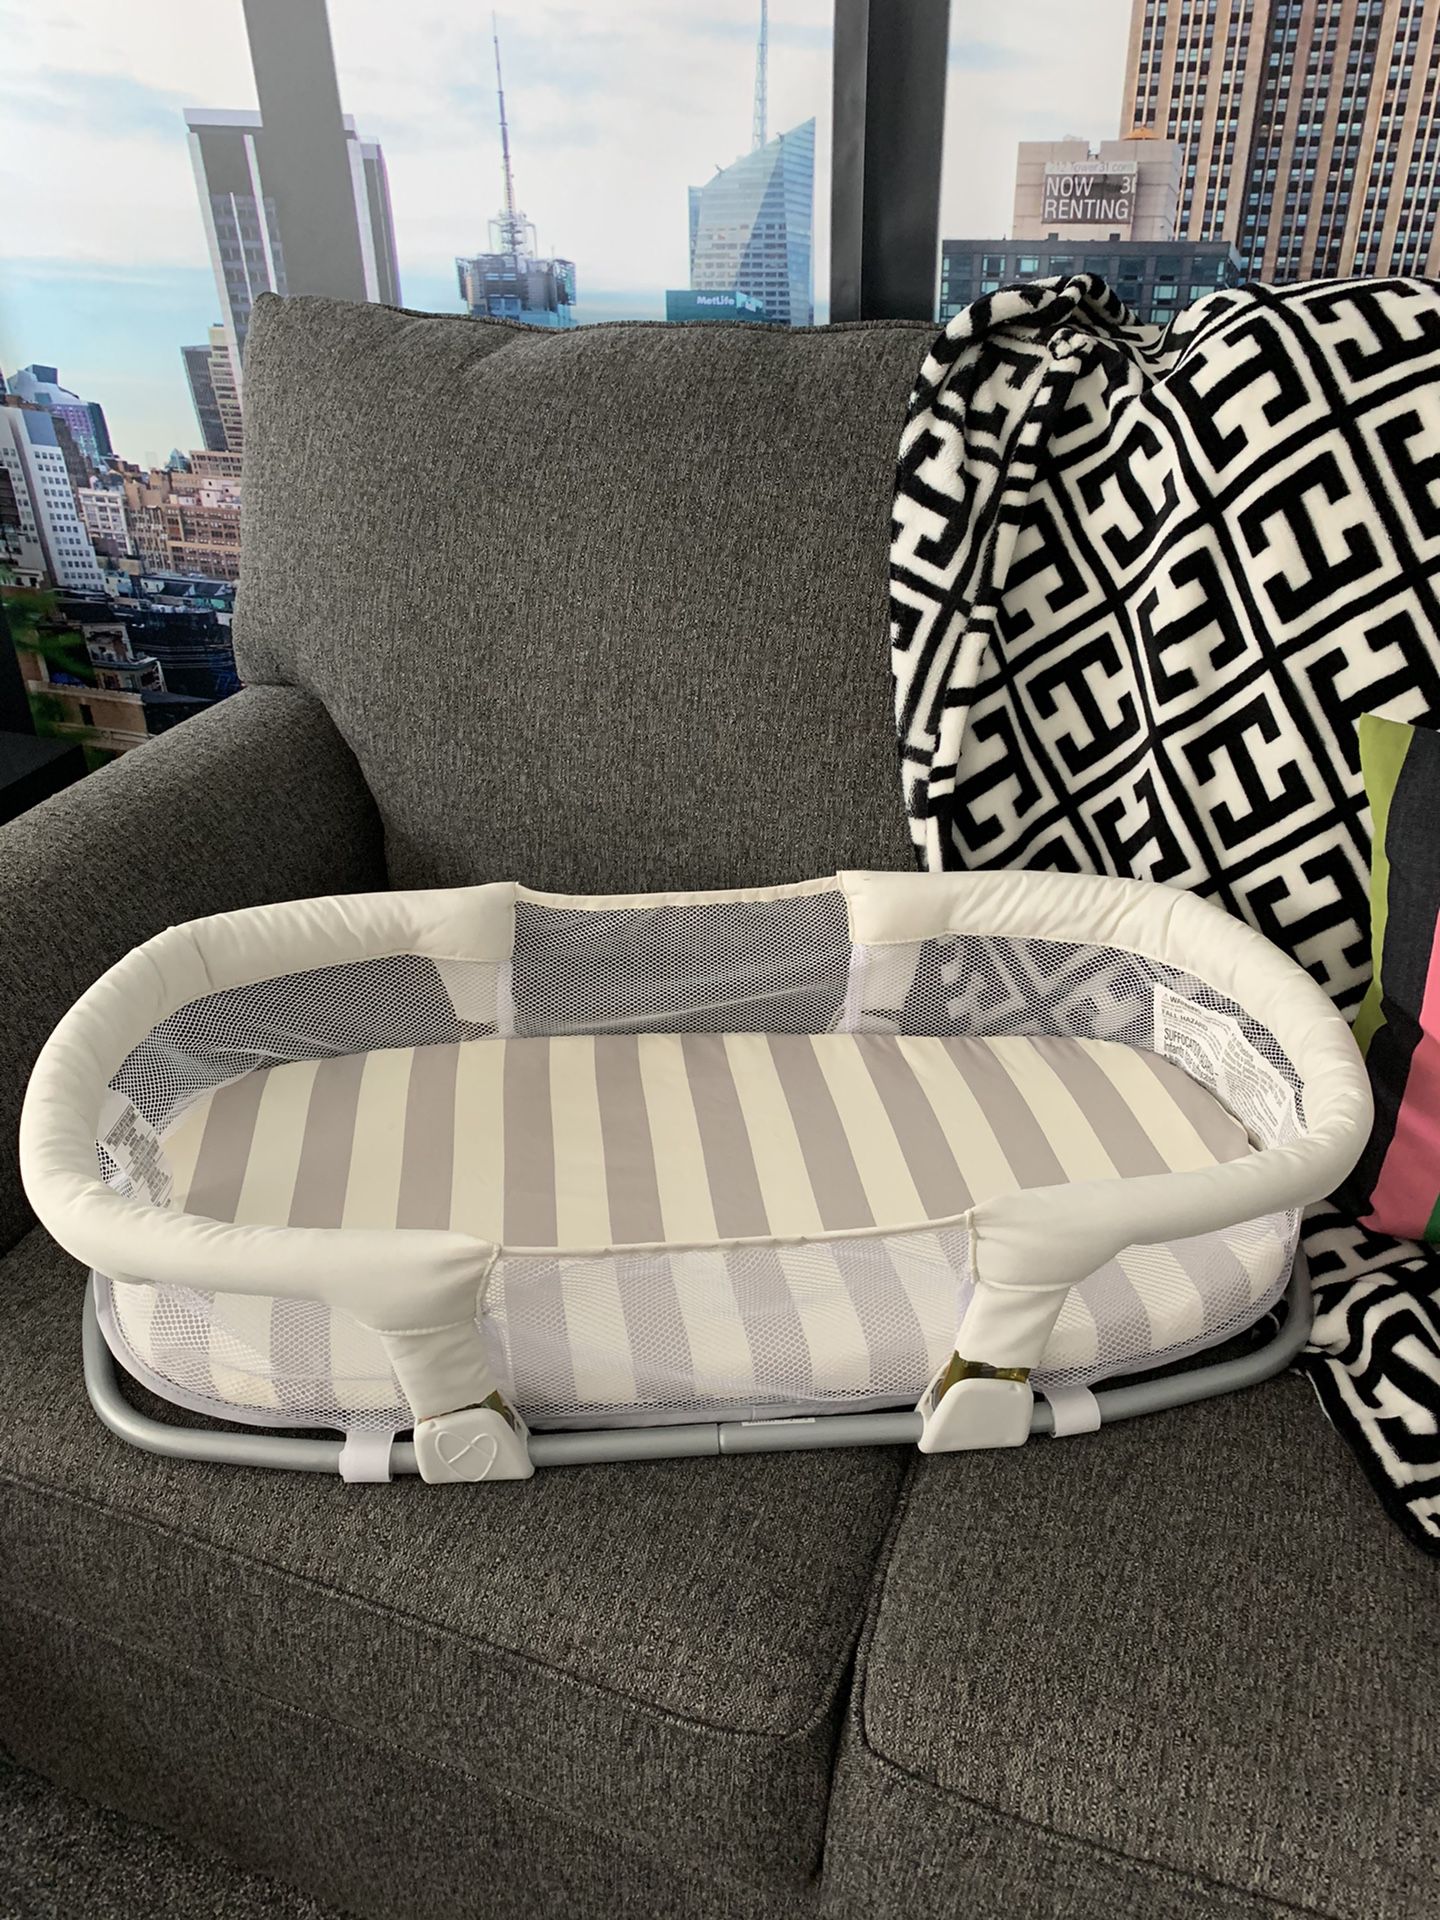 Baby bed - co sleeper - baby bassinet - baby stuff